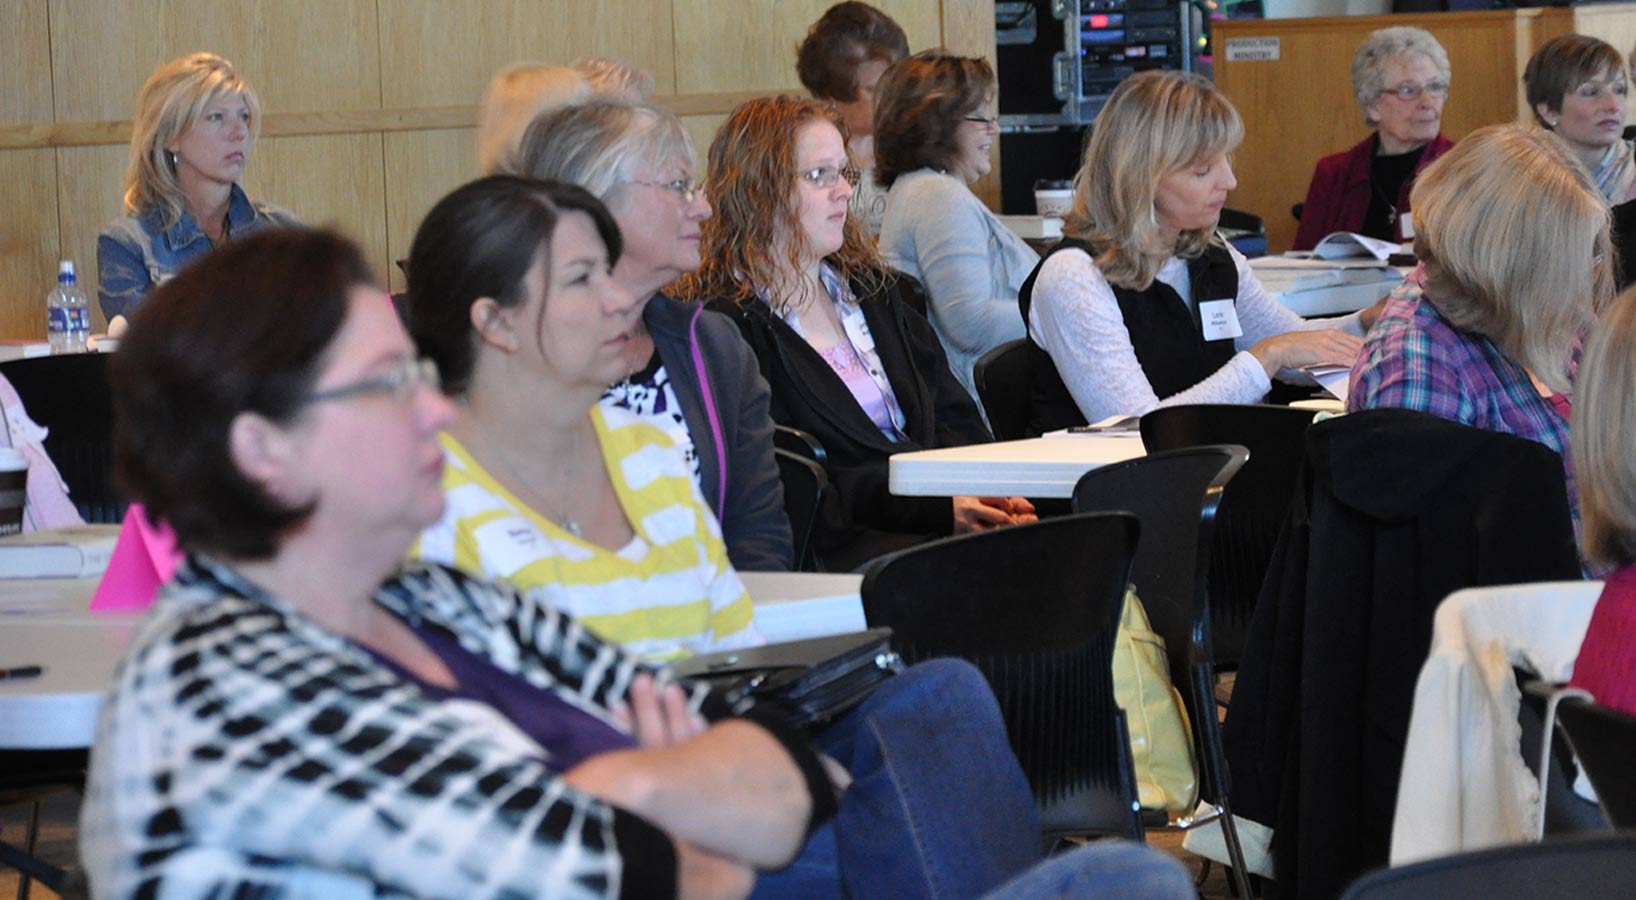 Women listening to speaker during a Women's workshop